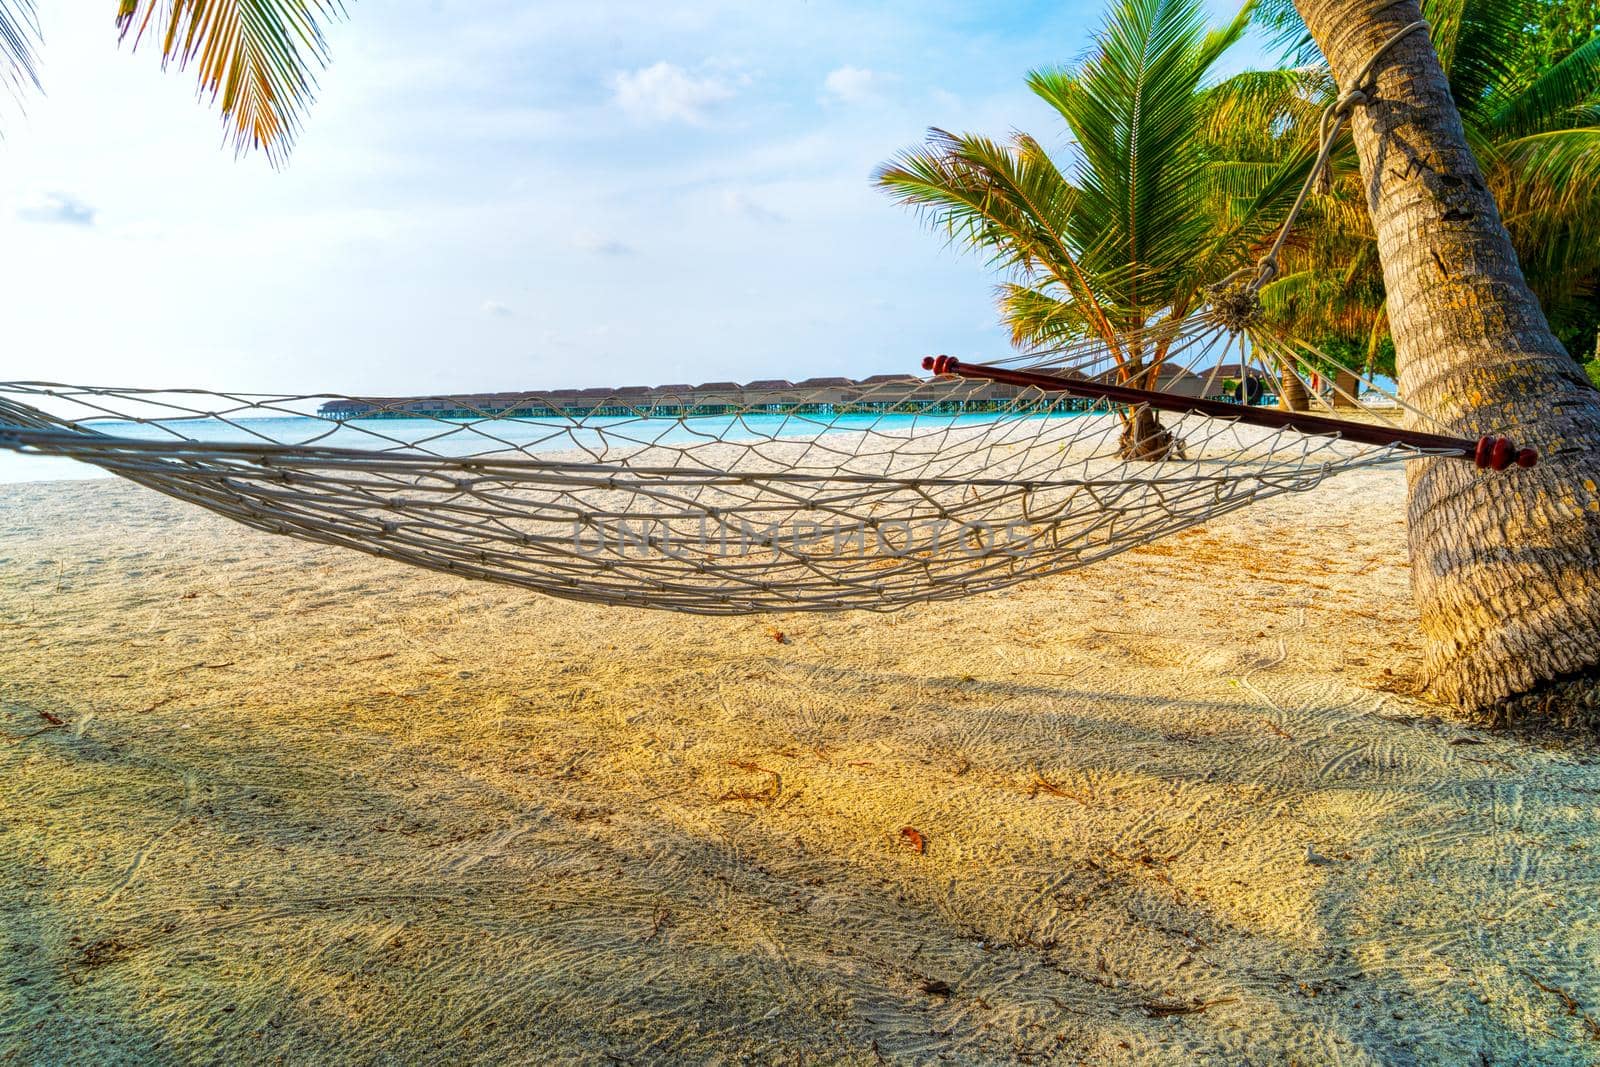 Empty hammock between palms trees at sandy beach by kolesnikov_studio